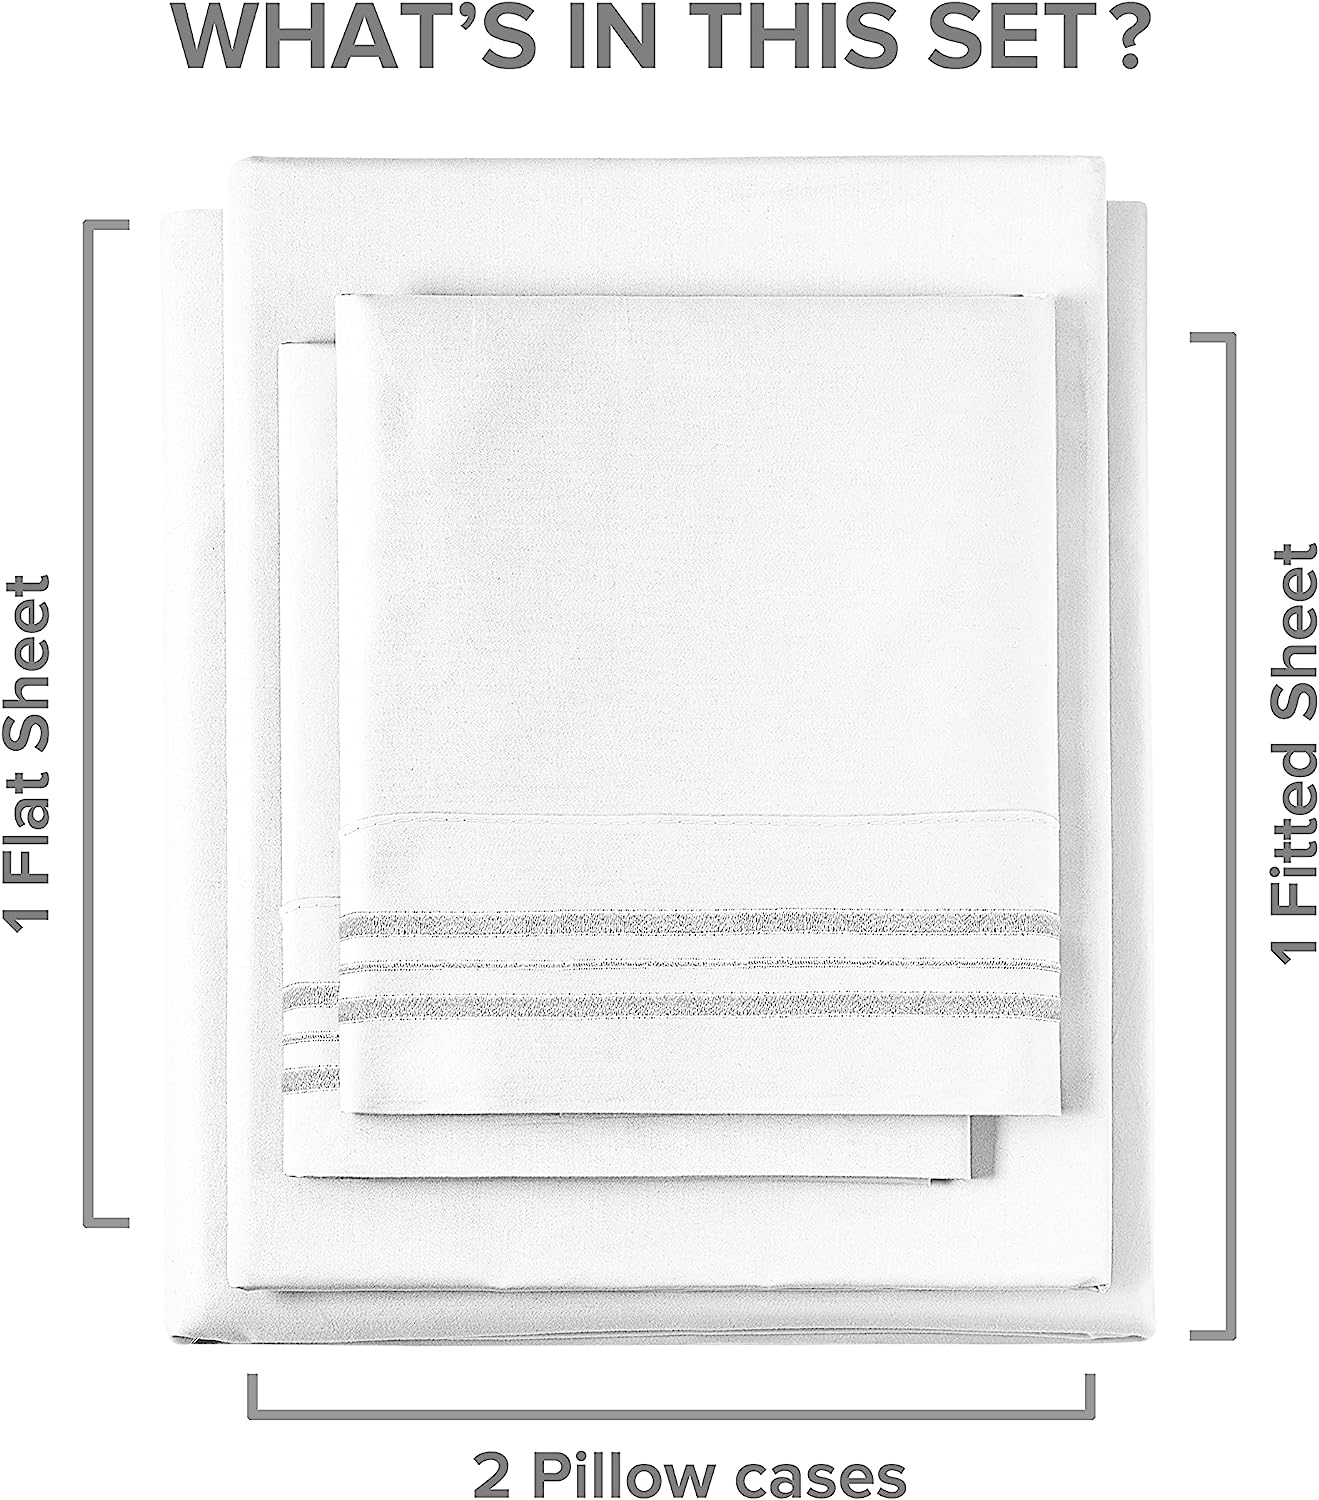 Cotton 400 Thread Count 4 Piece Deep Pocket Sheet Set - White